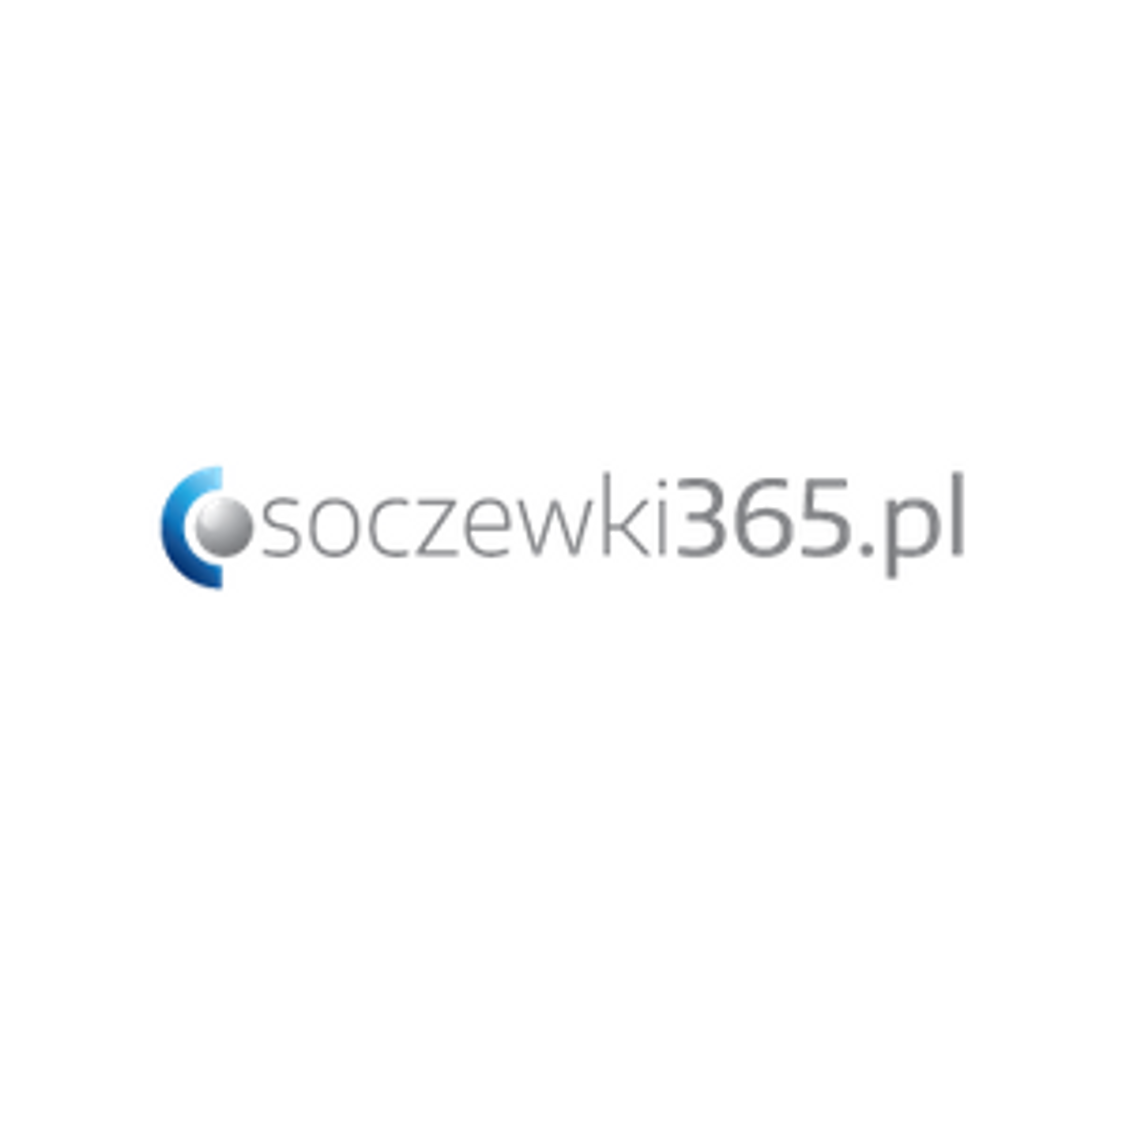 SOCZEWKI365.PL